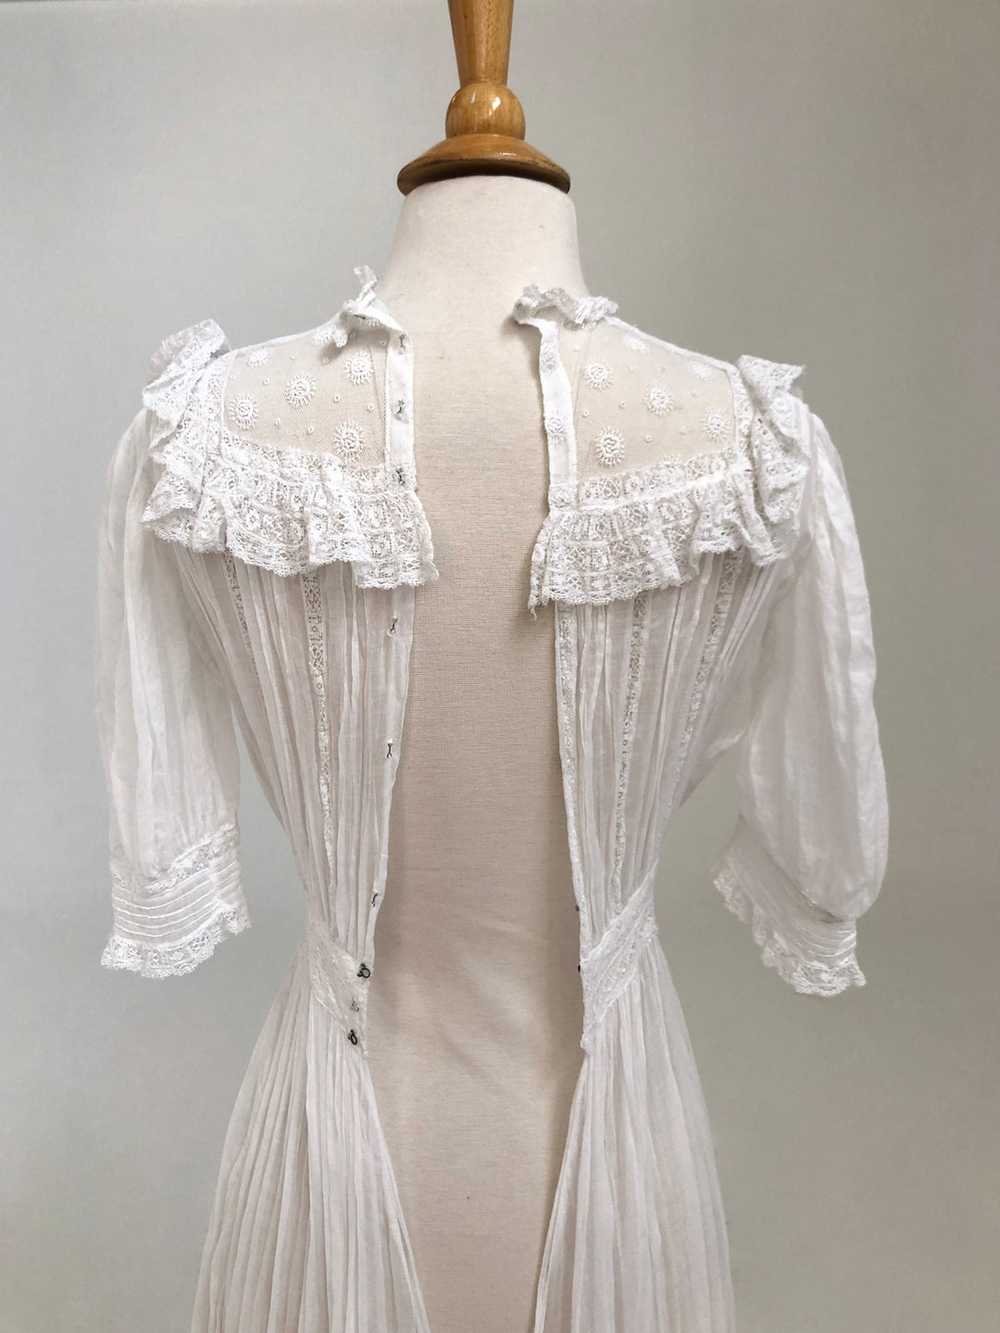 Victorian White Cotton Dress - image 1